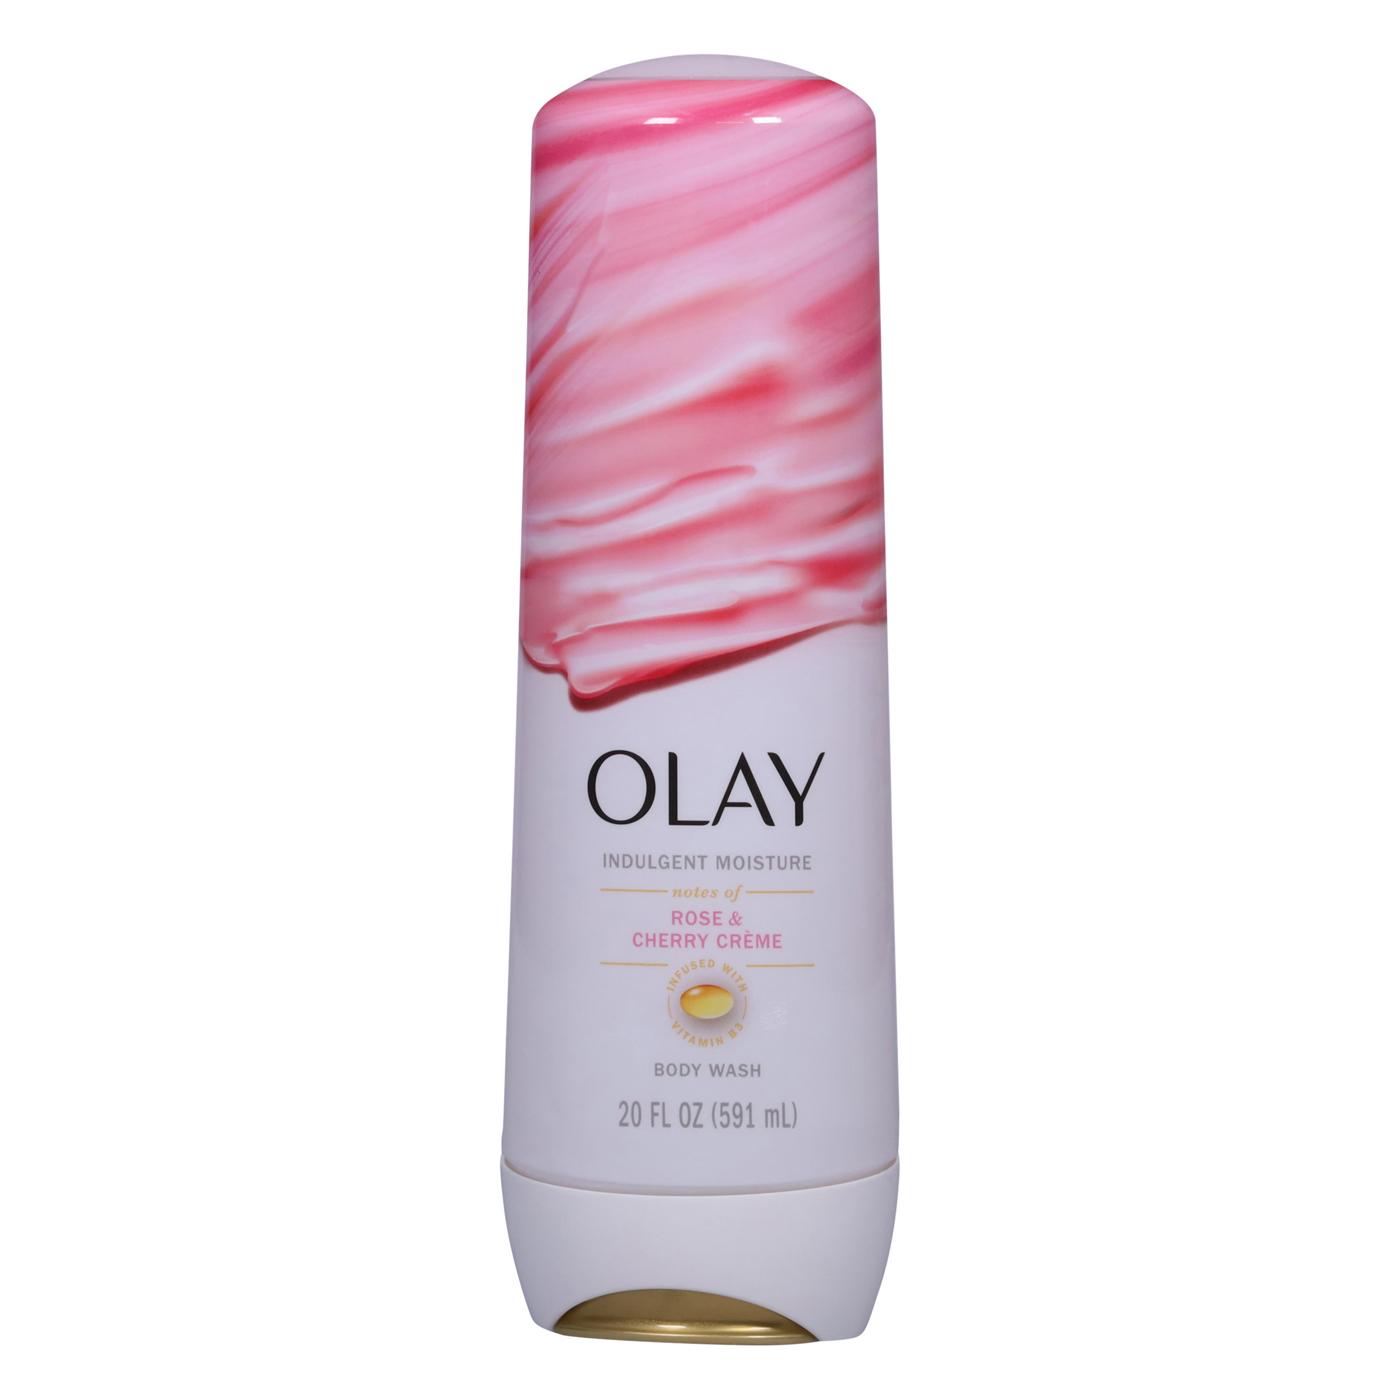 Olay Indulgent Moisture Creme Body Wash - Rose & Cherry; image 1 of 2